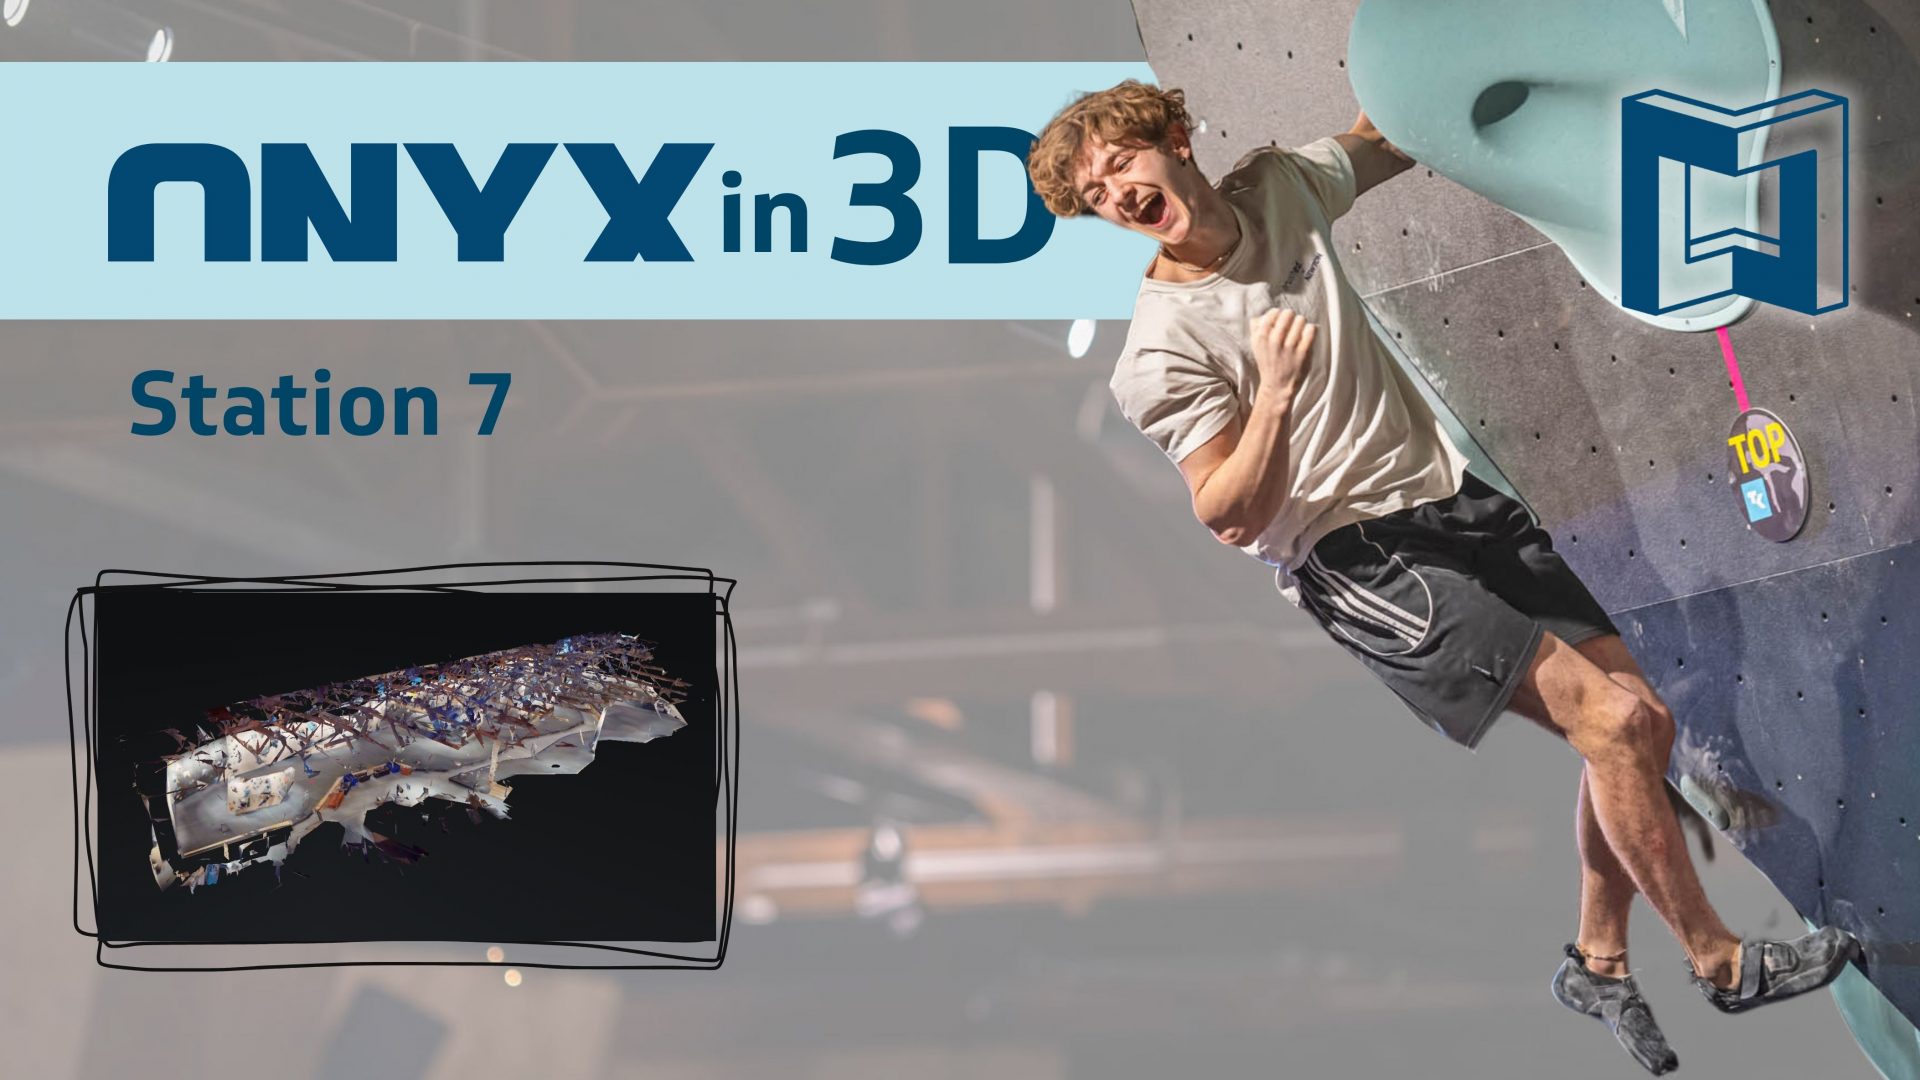 Das ONYX in 3D